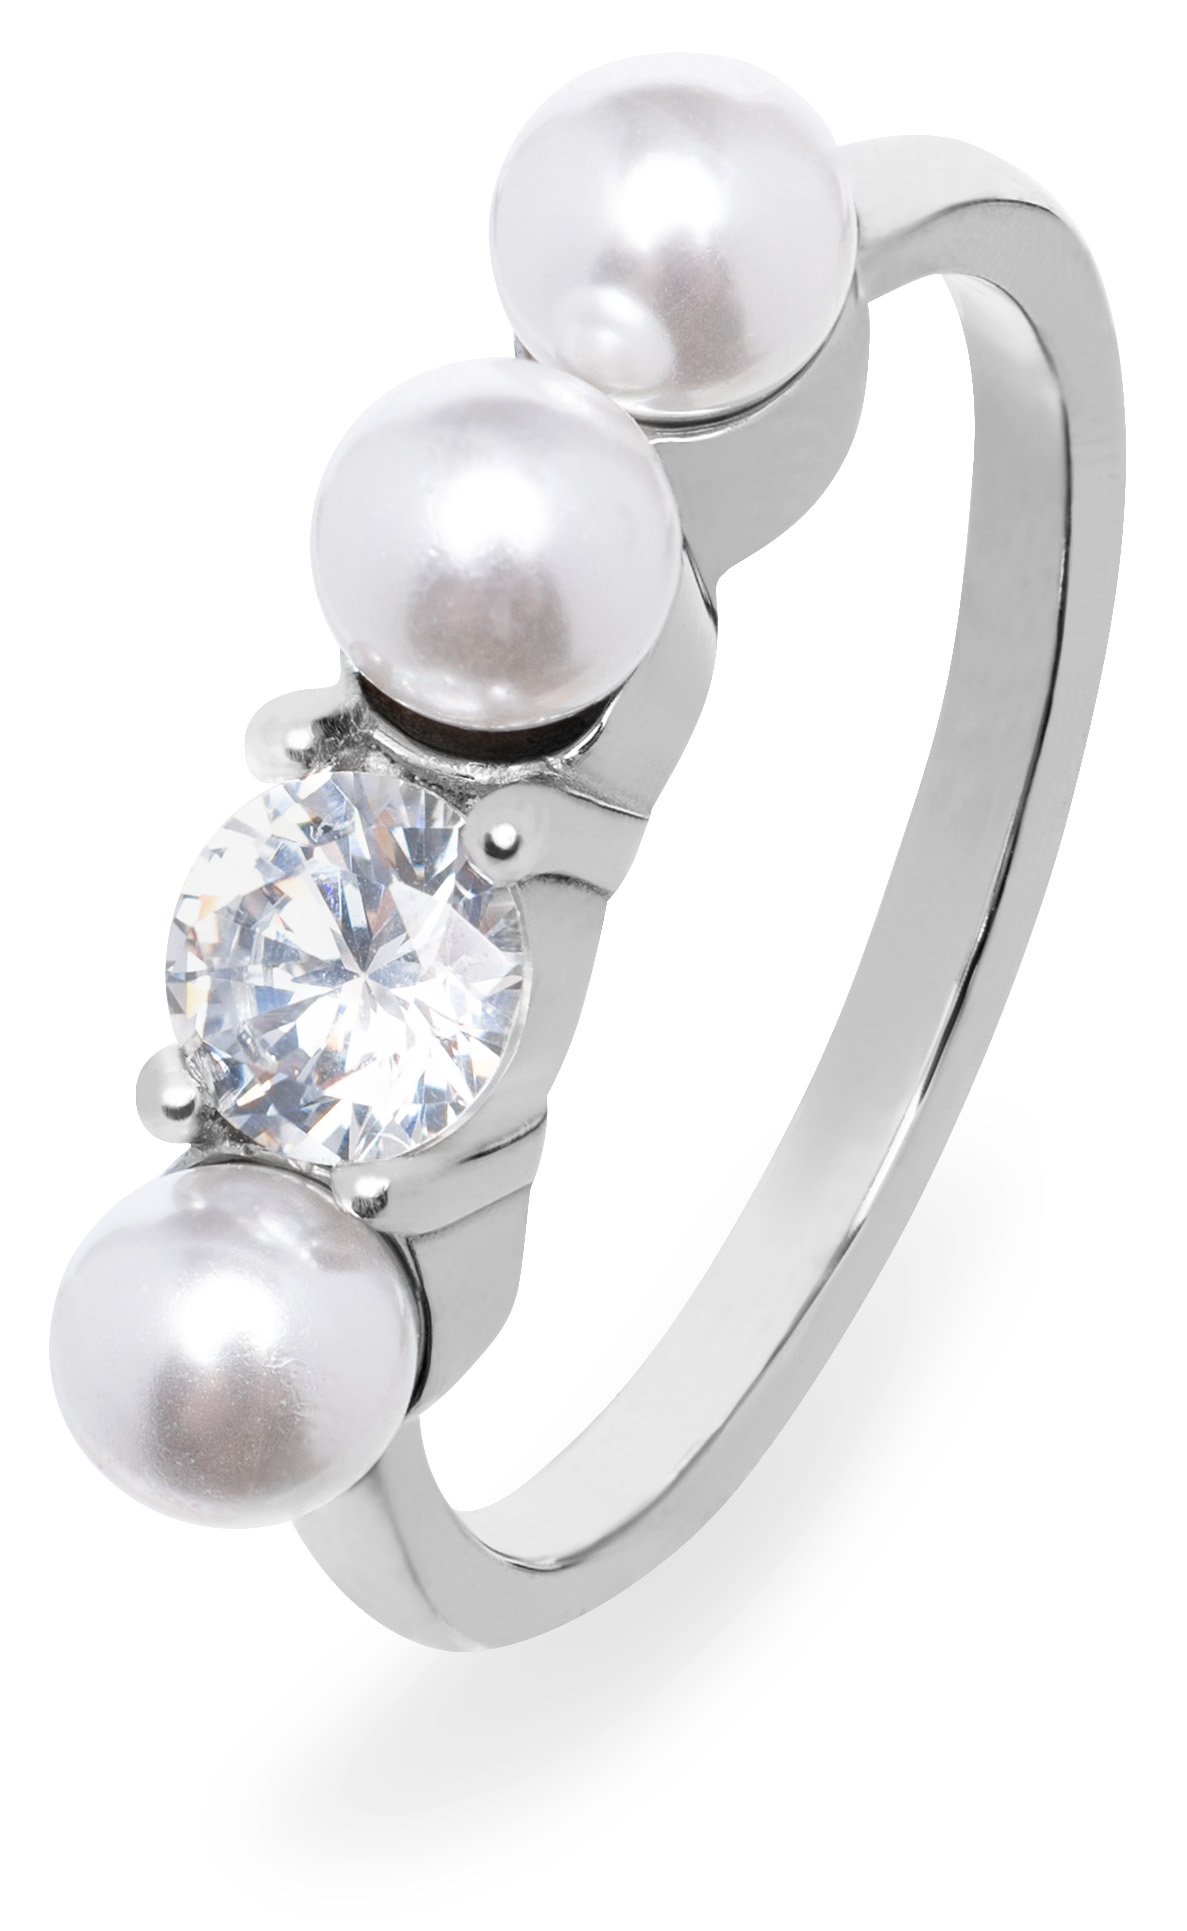 Troli Elegantní ocelový prsten se zirkonem a perlami VEDR0341S 60 mm